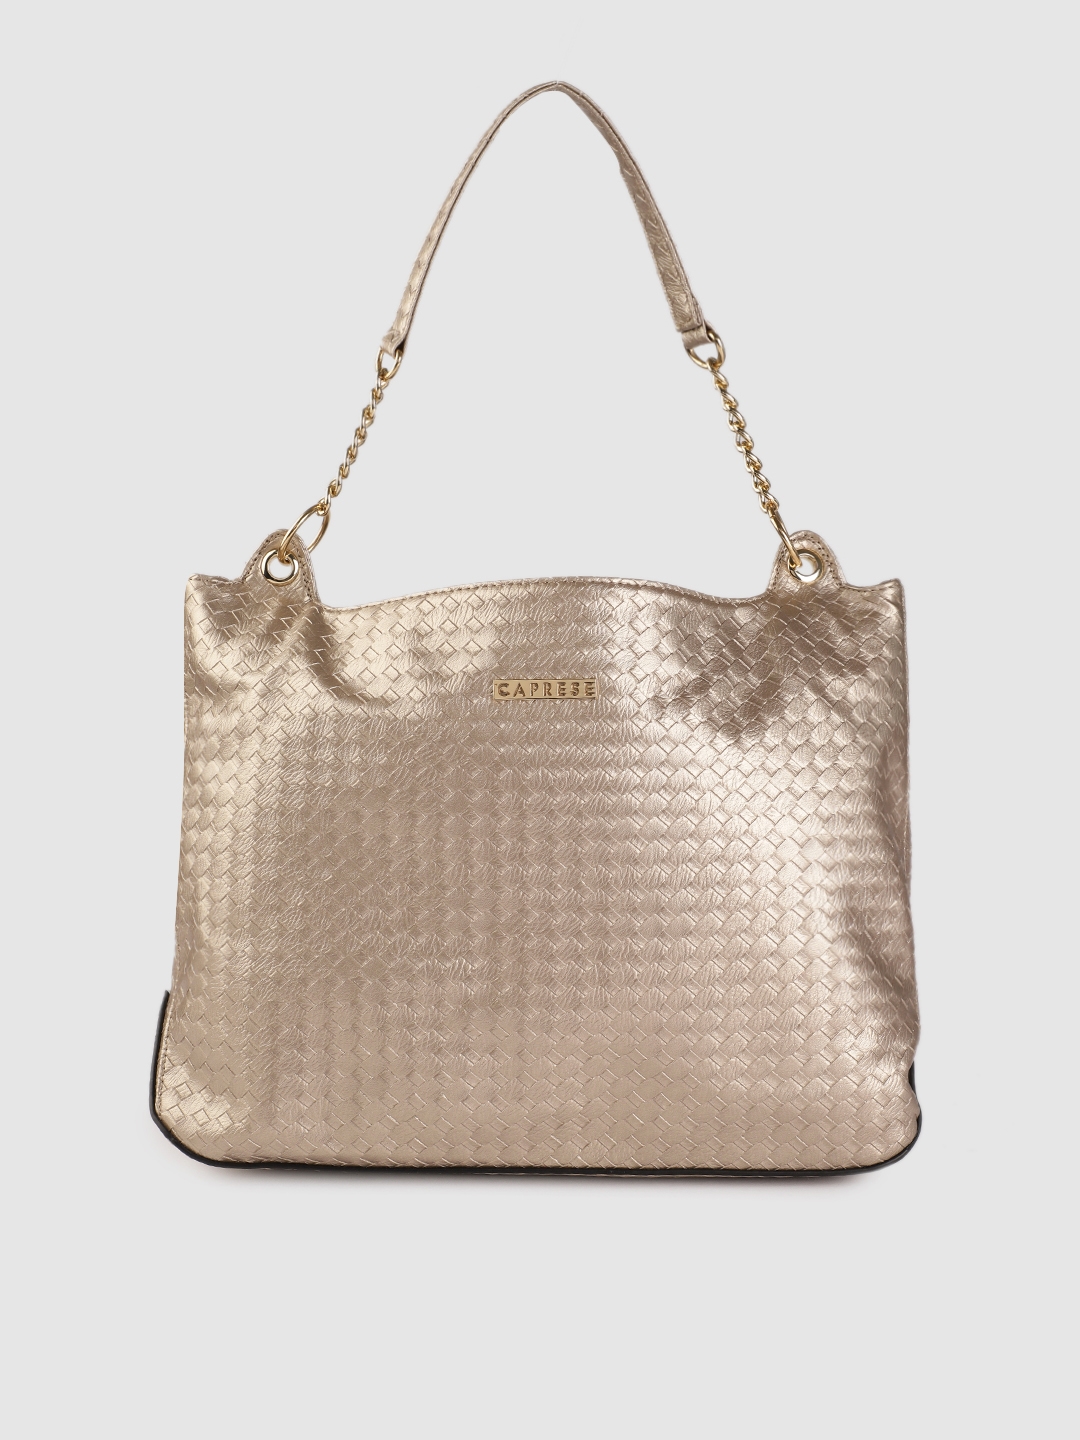 Caprese Gold Toned Textured Hobo Bag